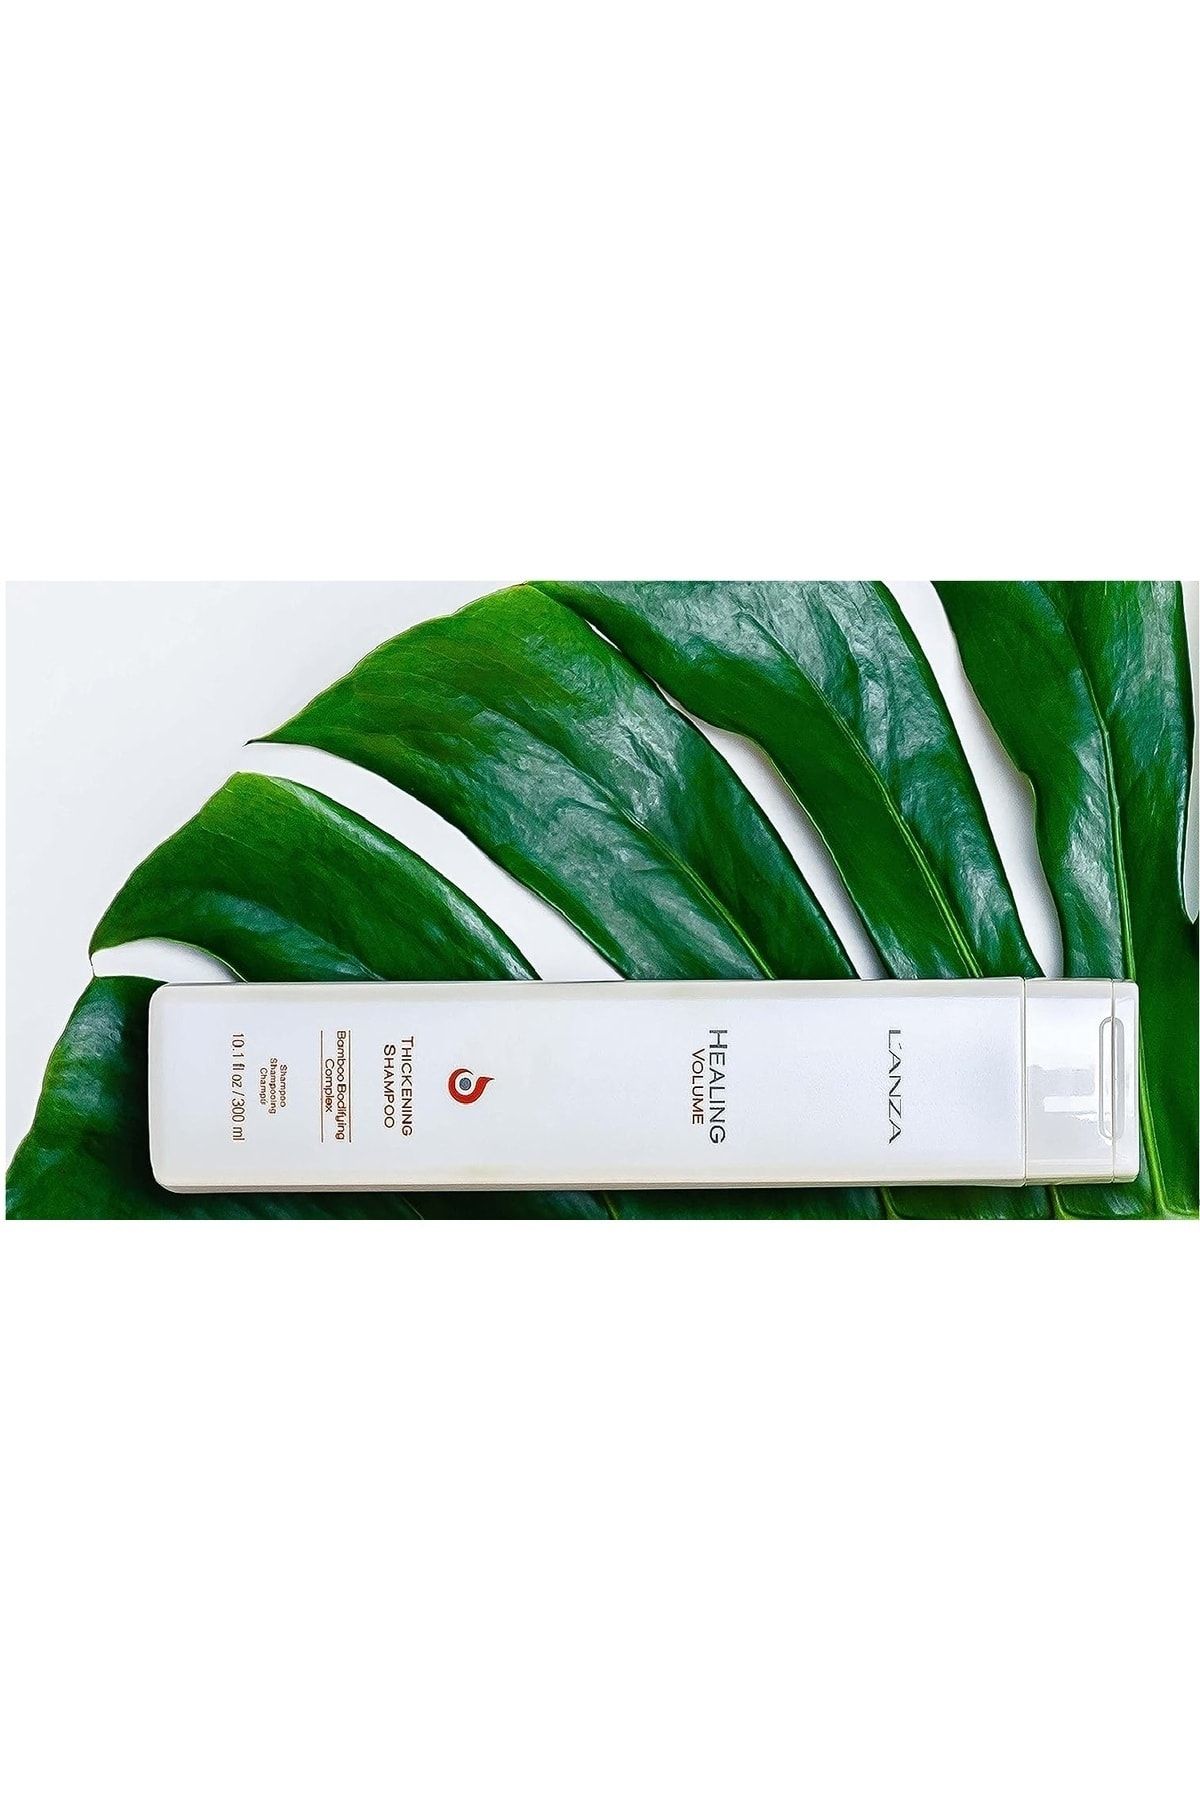 L'anza Healing Volume: Volumizing Shampoo Healing Dry & Exfoliating Hair (10.1 fl.oz.) ECBeauty!Q573